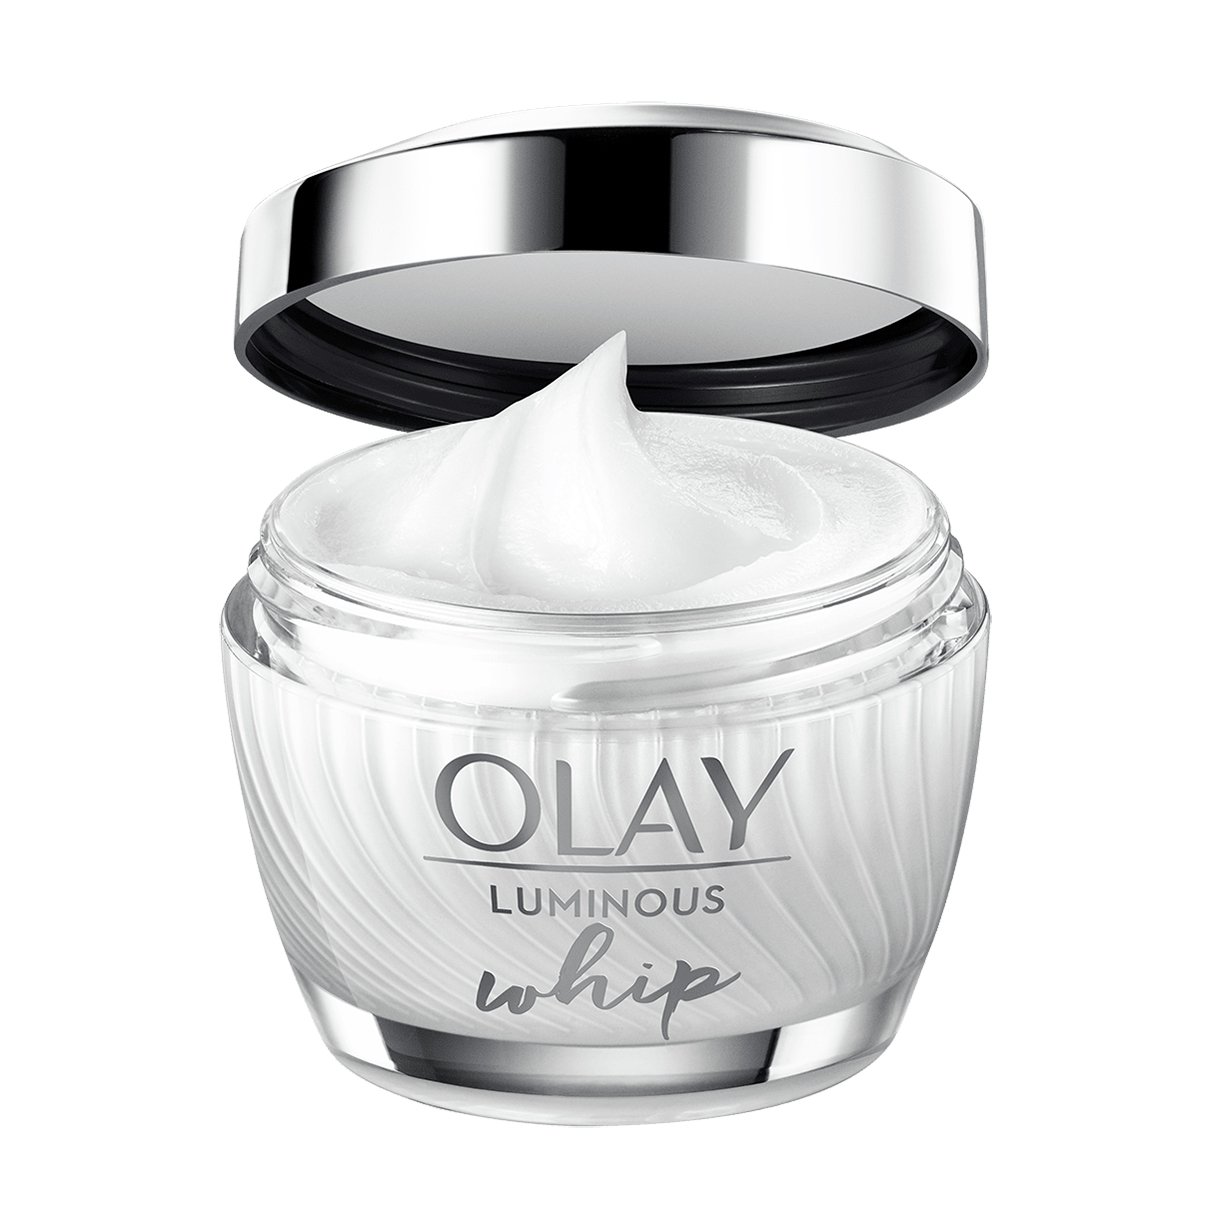 Olay Luminous Whip Cream - 50ml